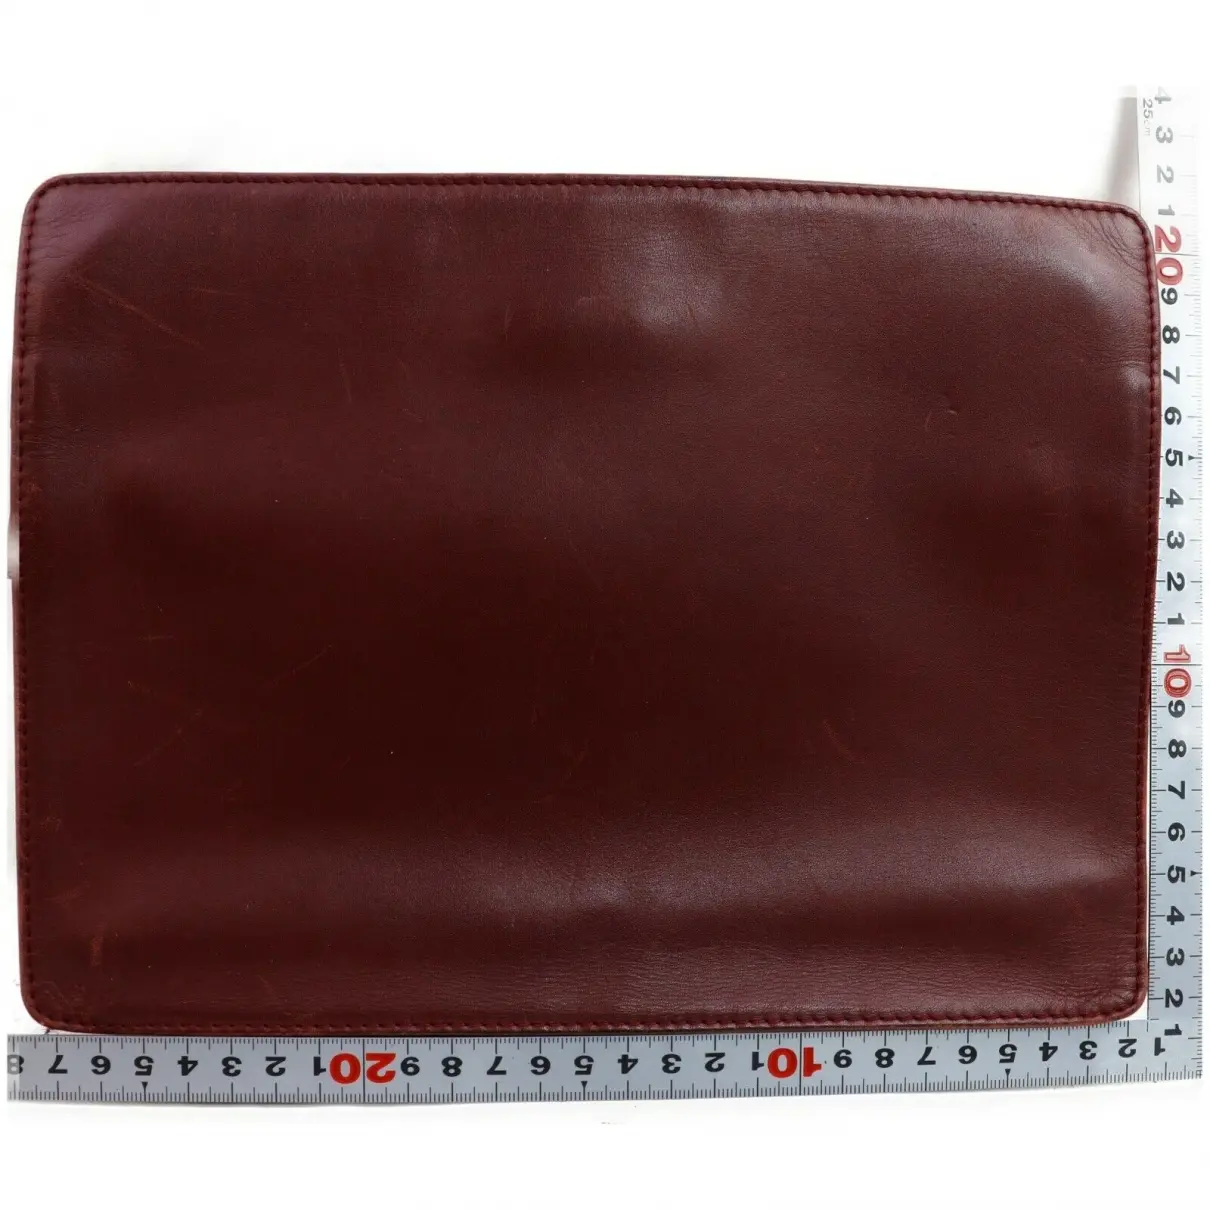 Cartier Leather clutch bag for sale - Vintage